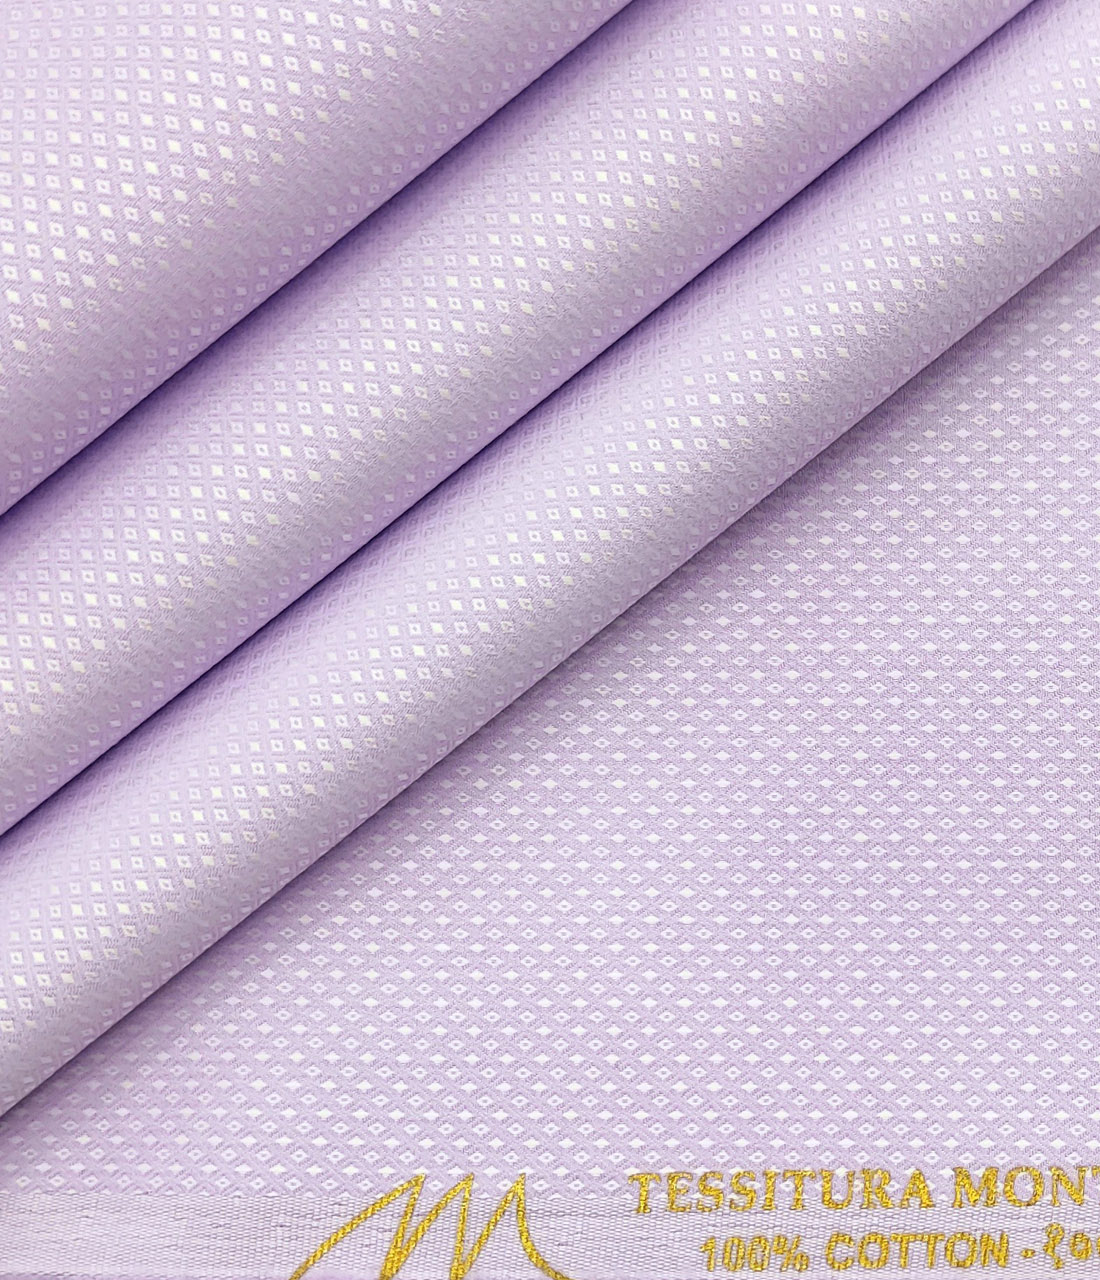 Tessitura Monti Men's Giza Cotton Structured 2 Meter Unstitched Shirting Fabric (Light Purple)